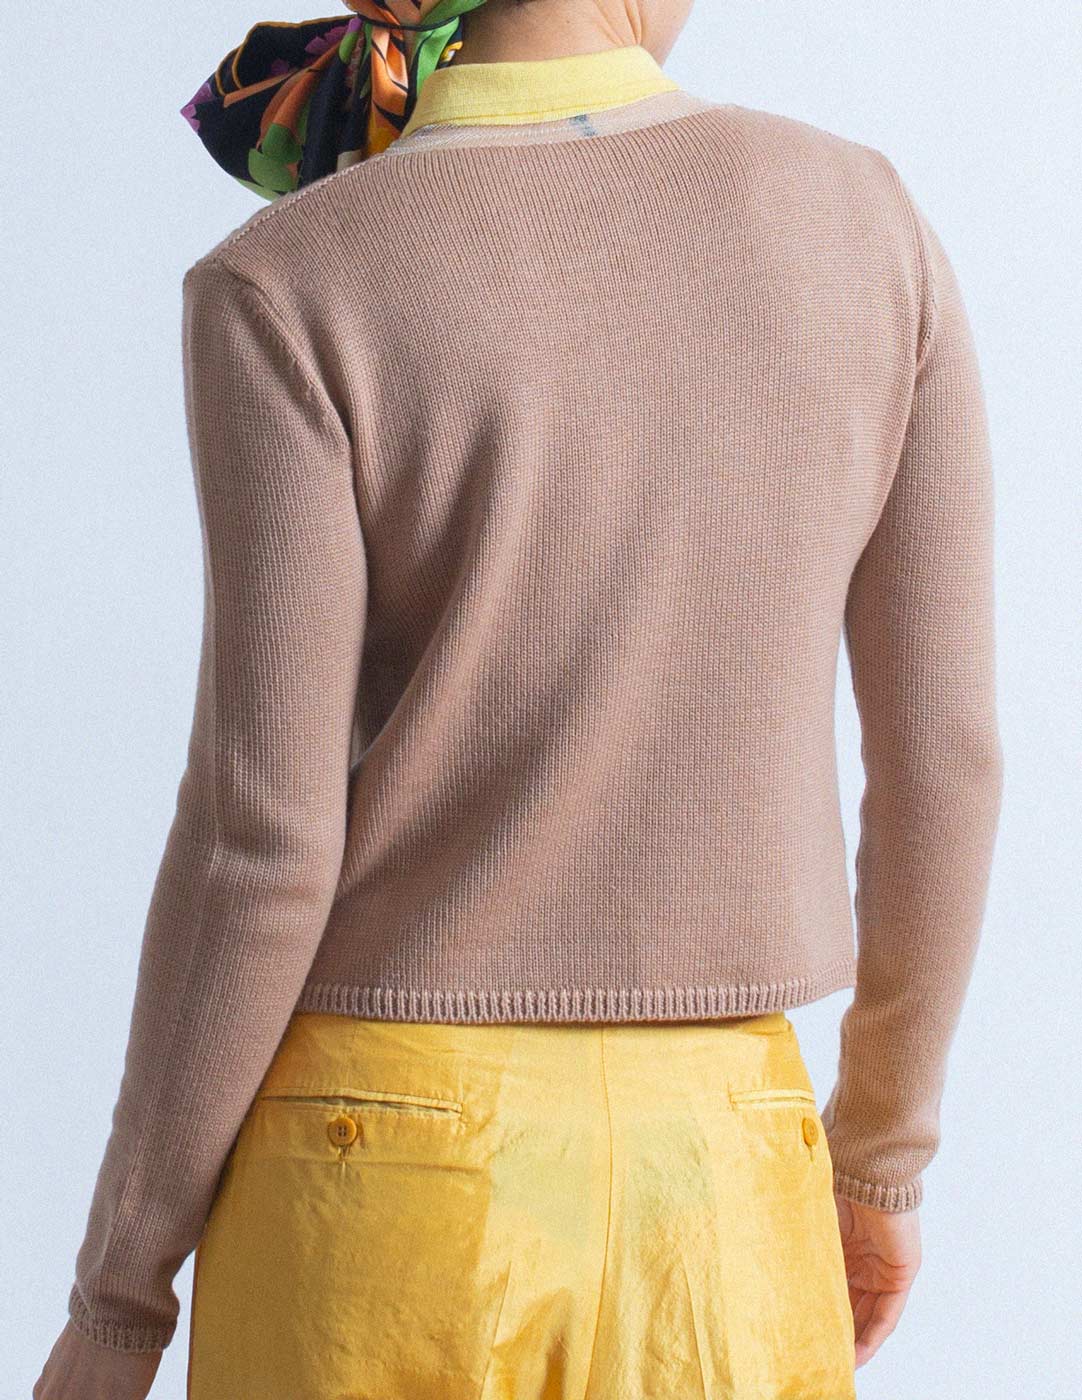 Miu Miu textured wool cardigan with contrasting collar back view